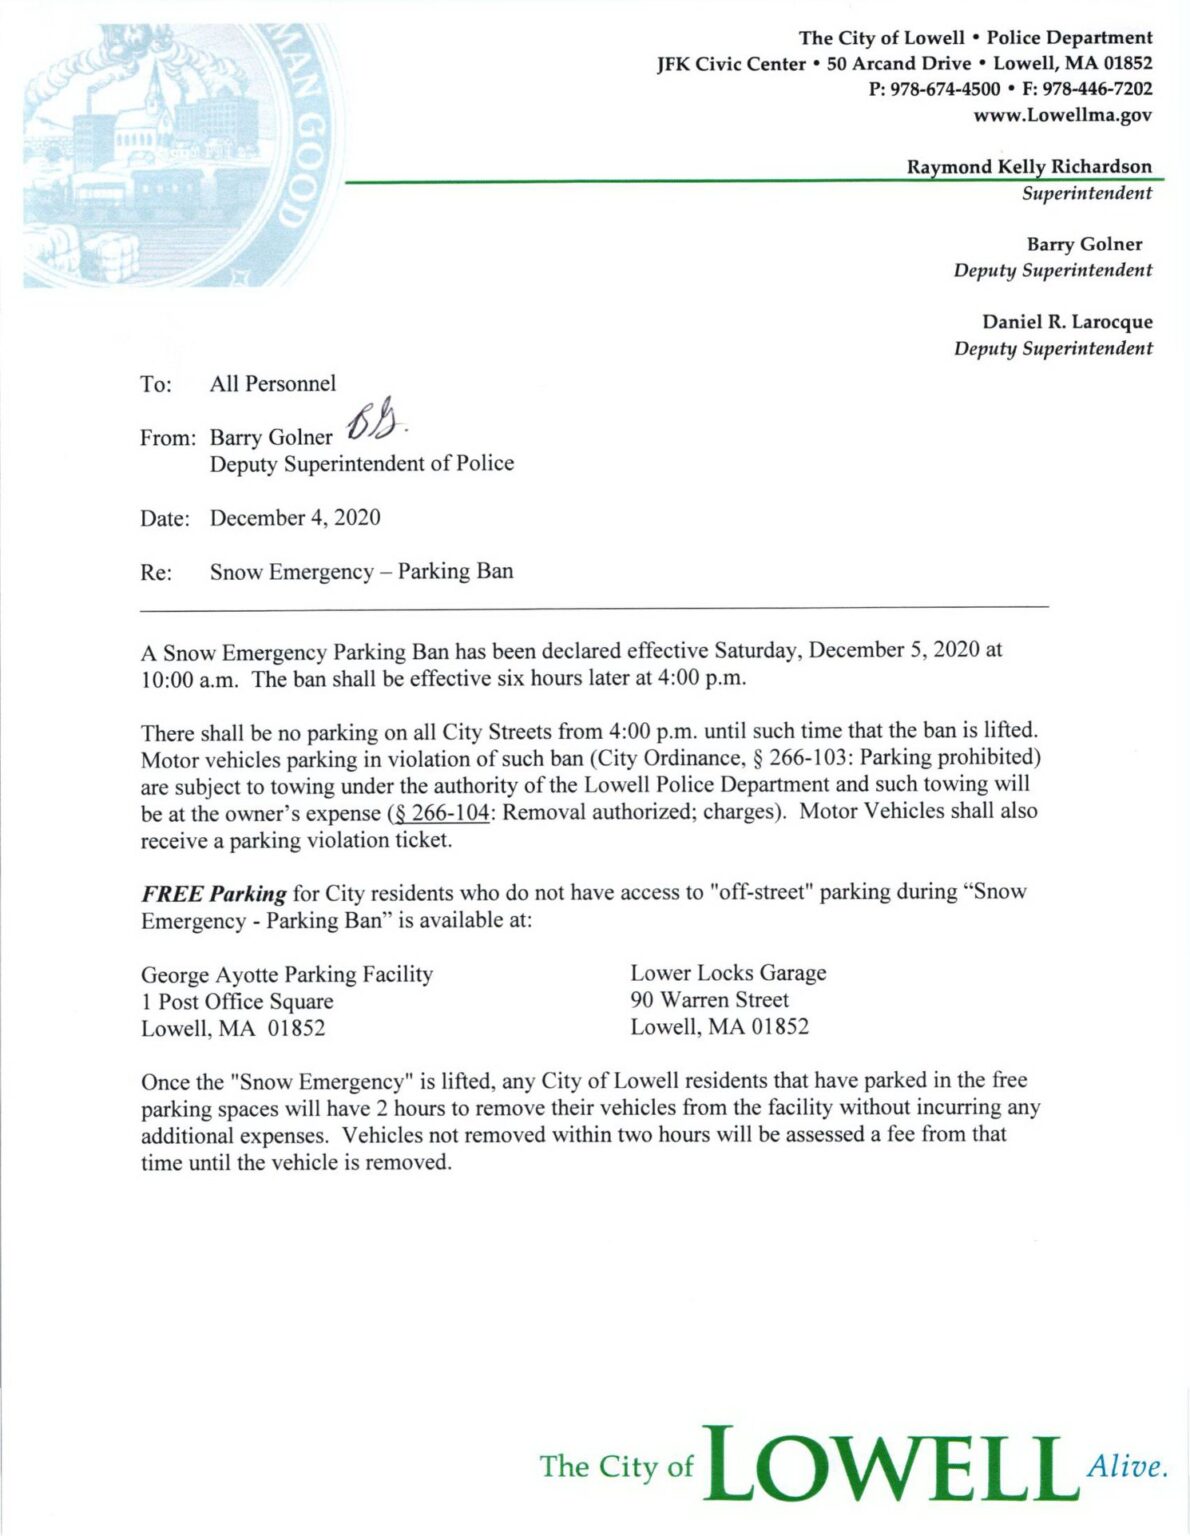 Snow Emergency Parking Ban 12/5/2020 Bulletin Board